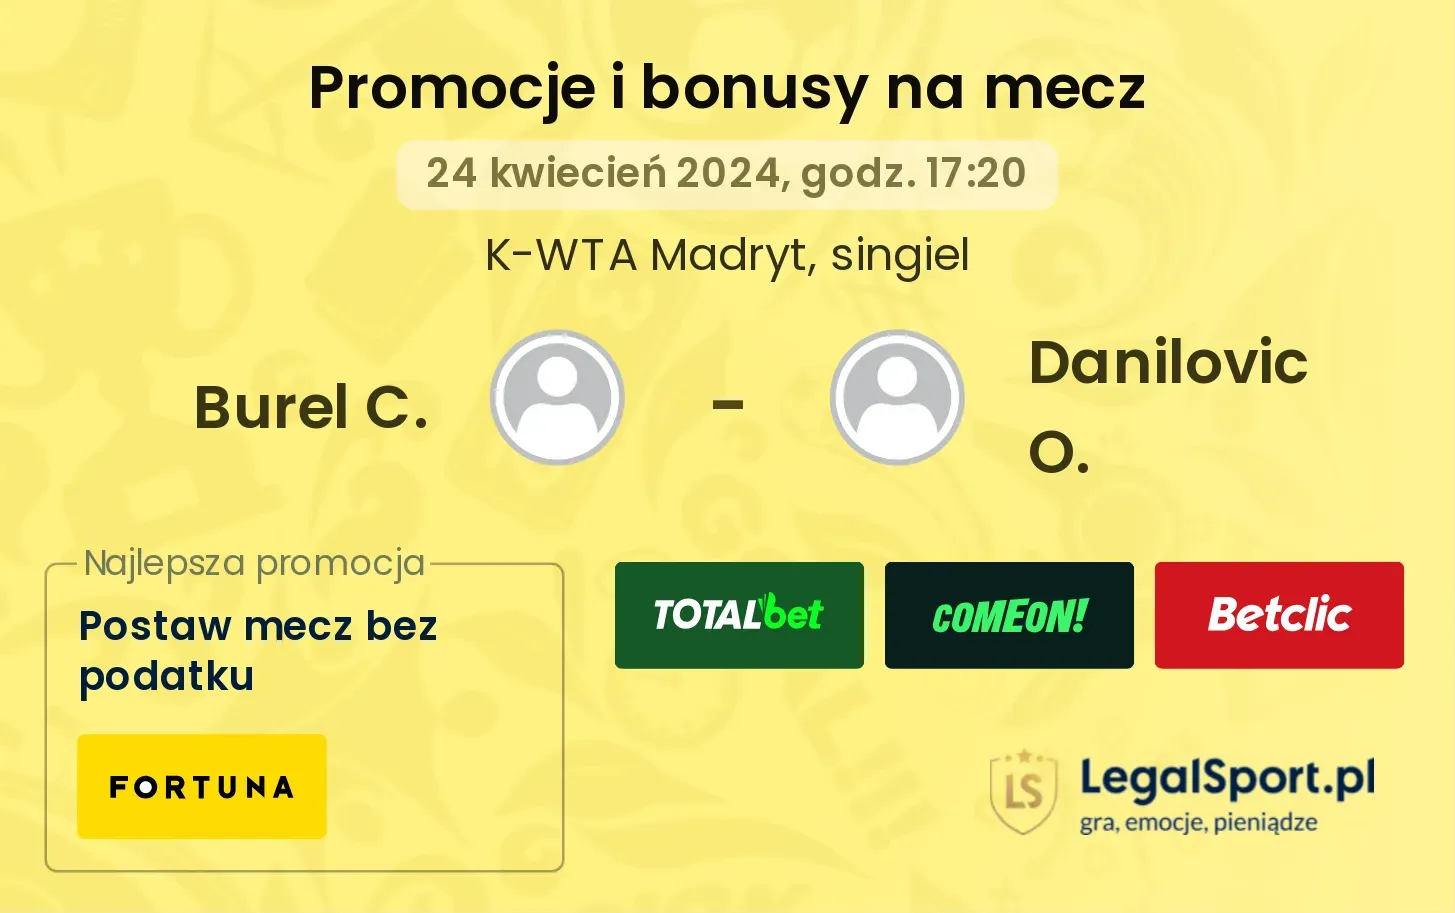 Burel C. - Danilovic O. promocje bonusy na mecz